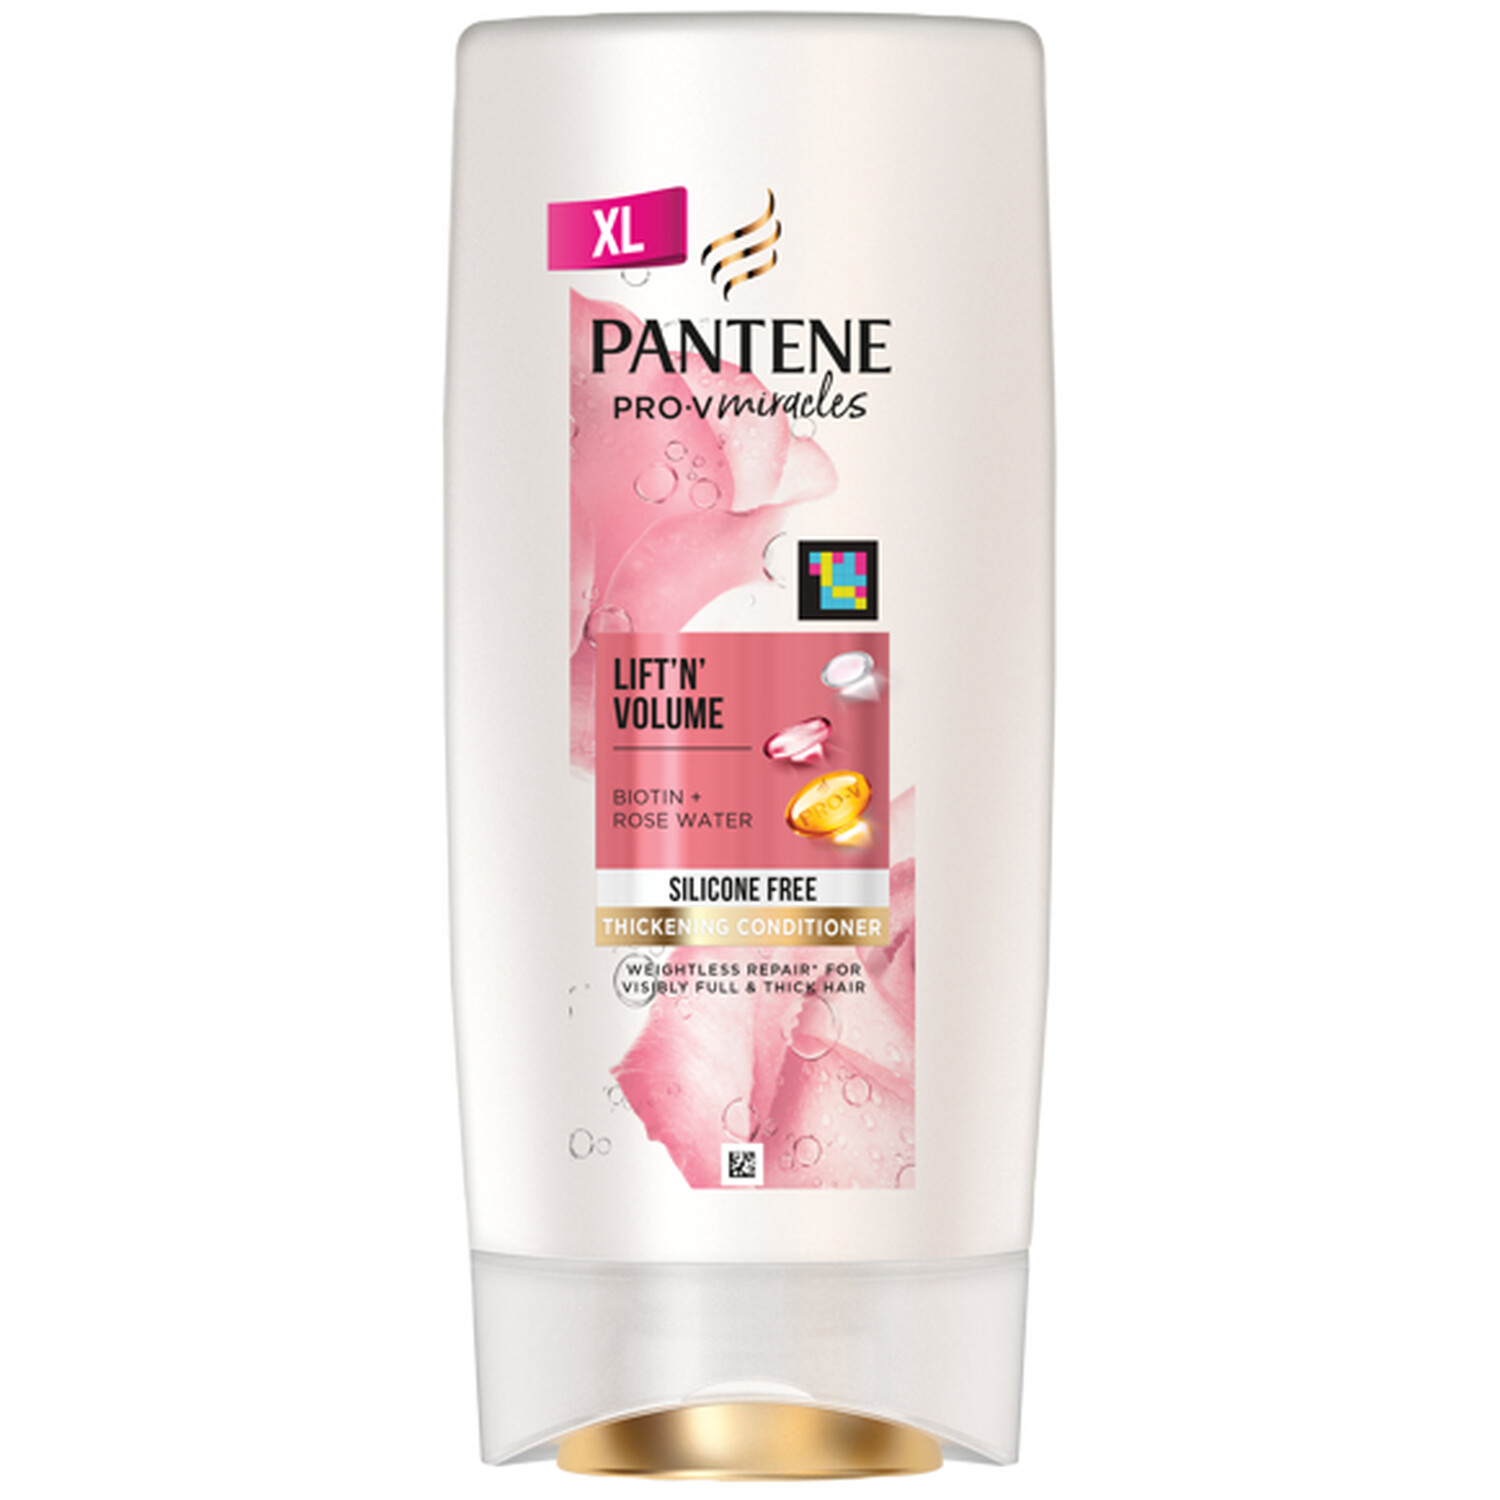 Pantene Pro-V Miracles Lift 'N' Volume Hair Conditioner 400ml Image